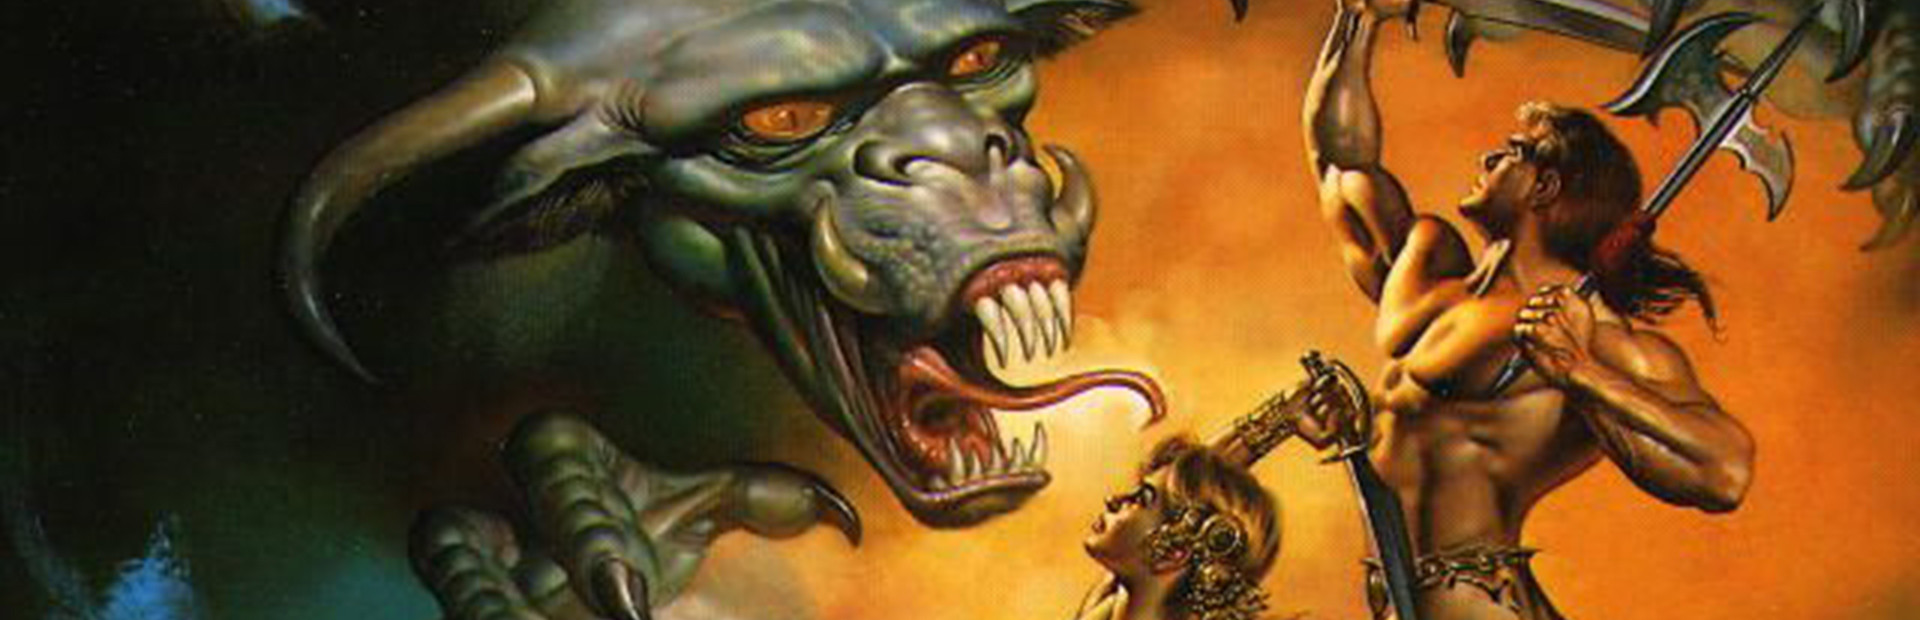 Dragon Wars cover image